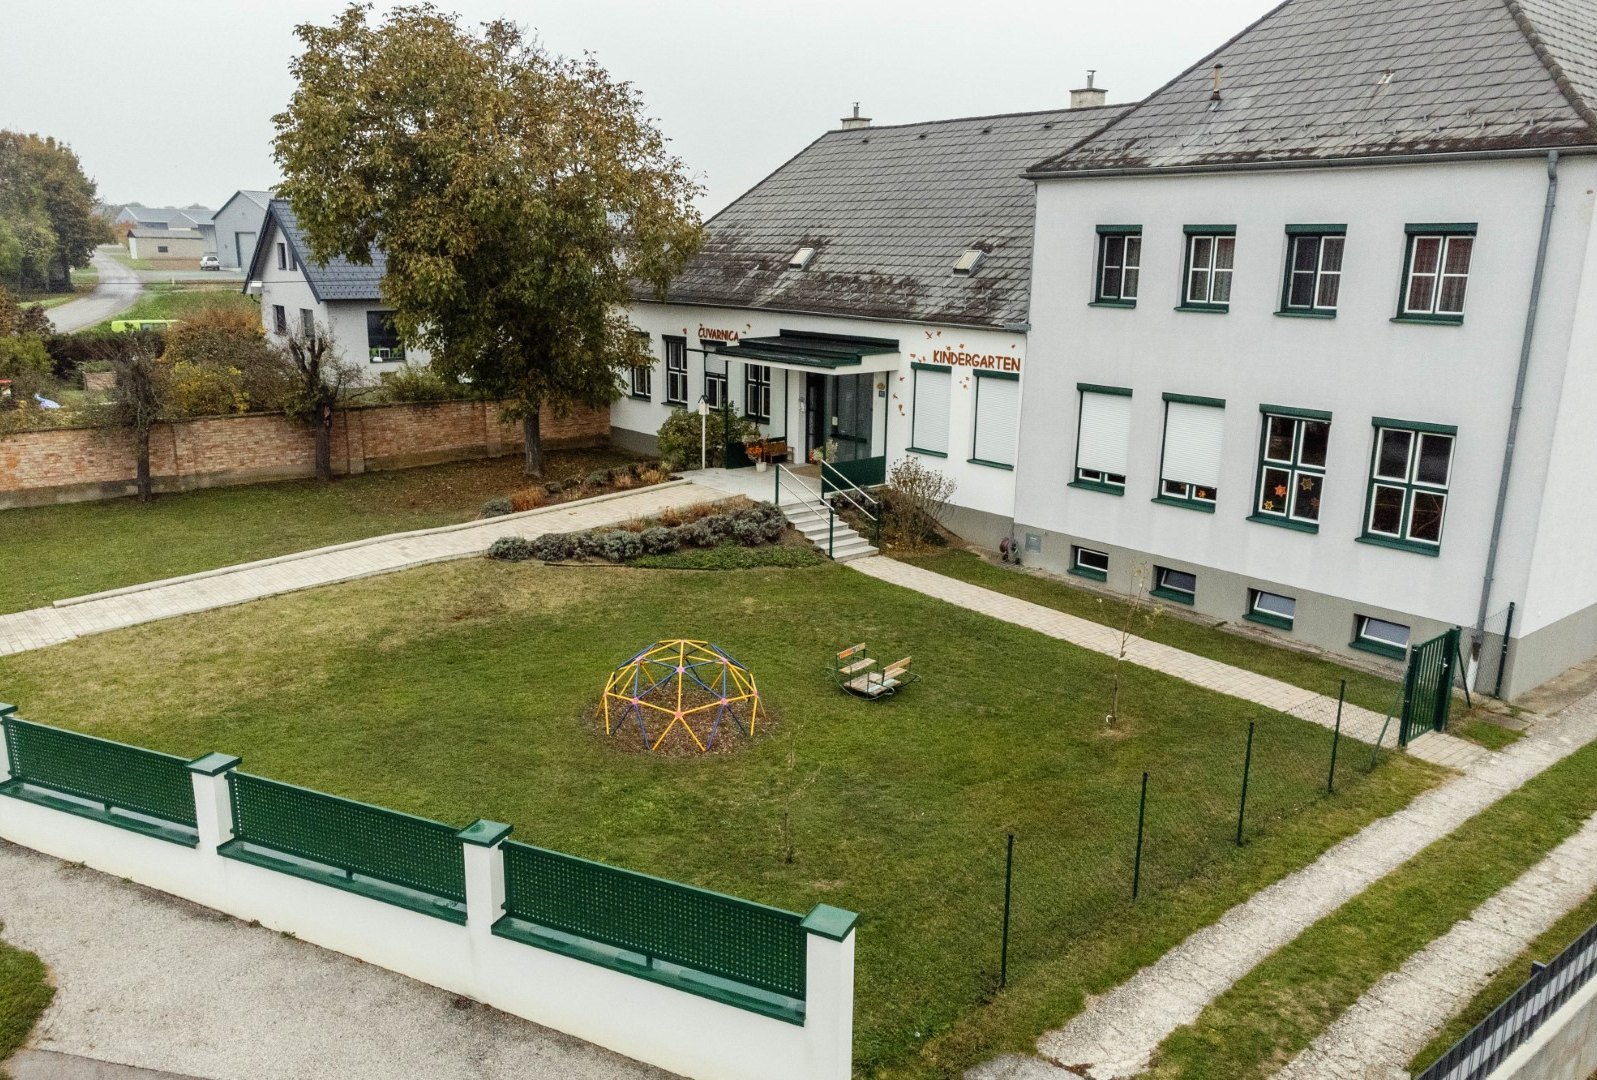 [Translate to Burgenland-Kroatisch:] Kindergarten in Kleinwarasdorf